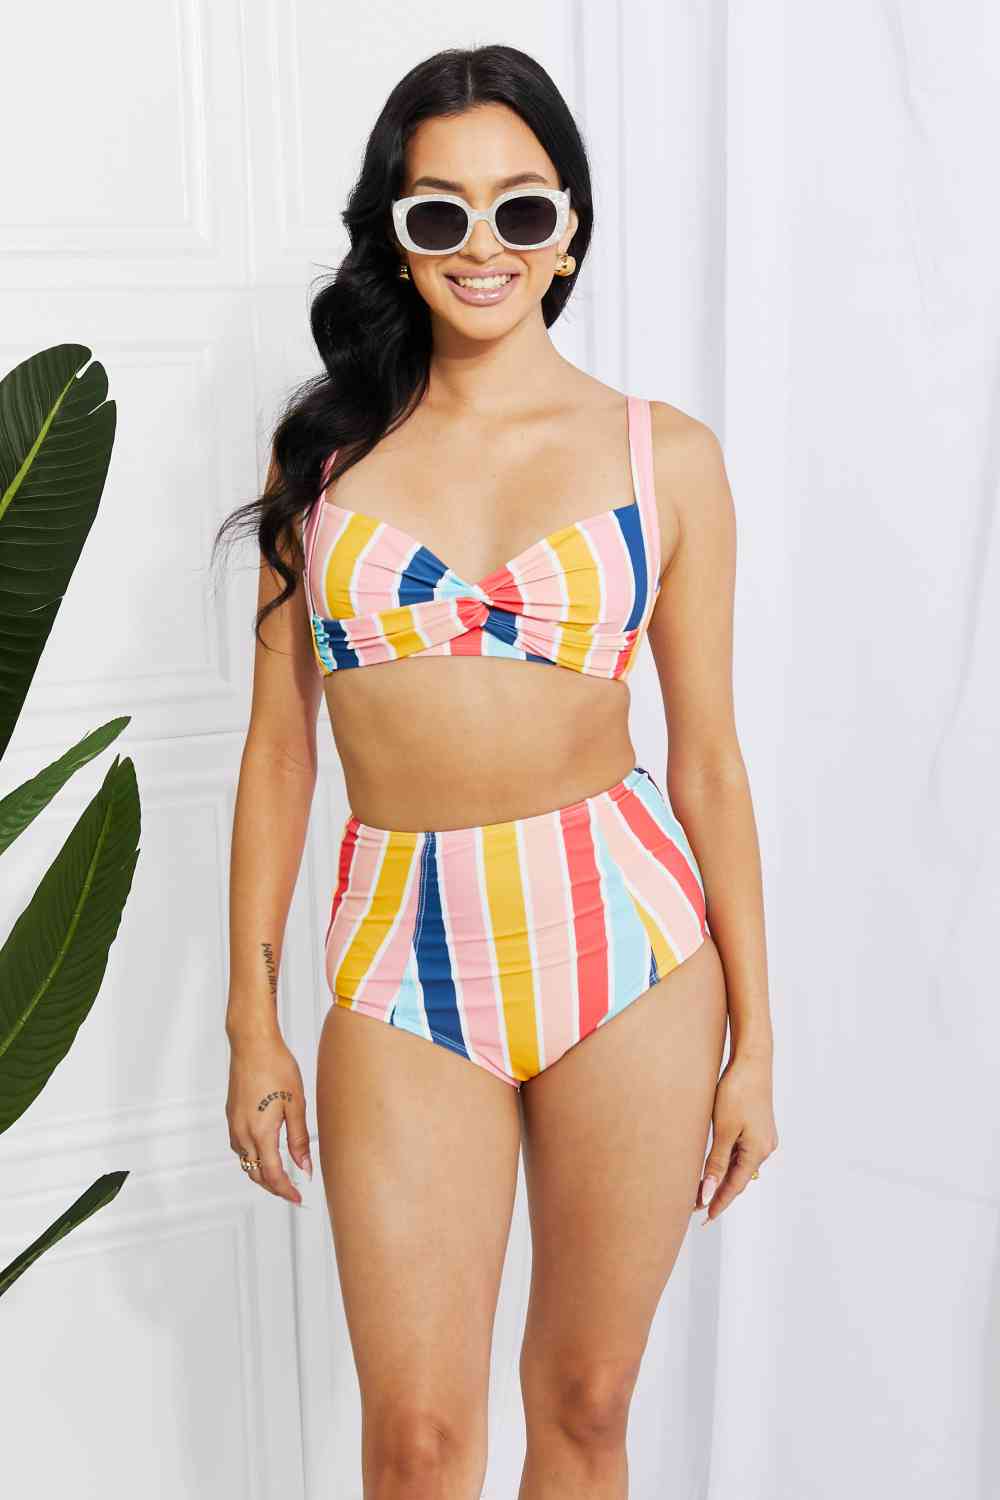 Marina West Swim Take A Dip Twist High - Rise Bikini in Stripe - Happily Ever Atchison Shop Co.